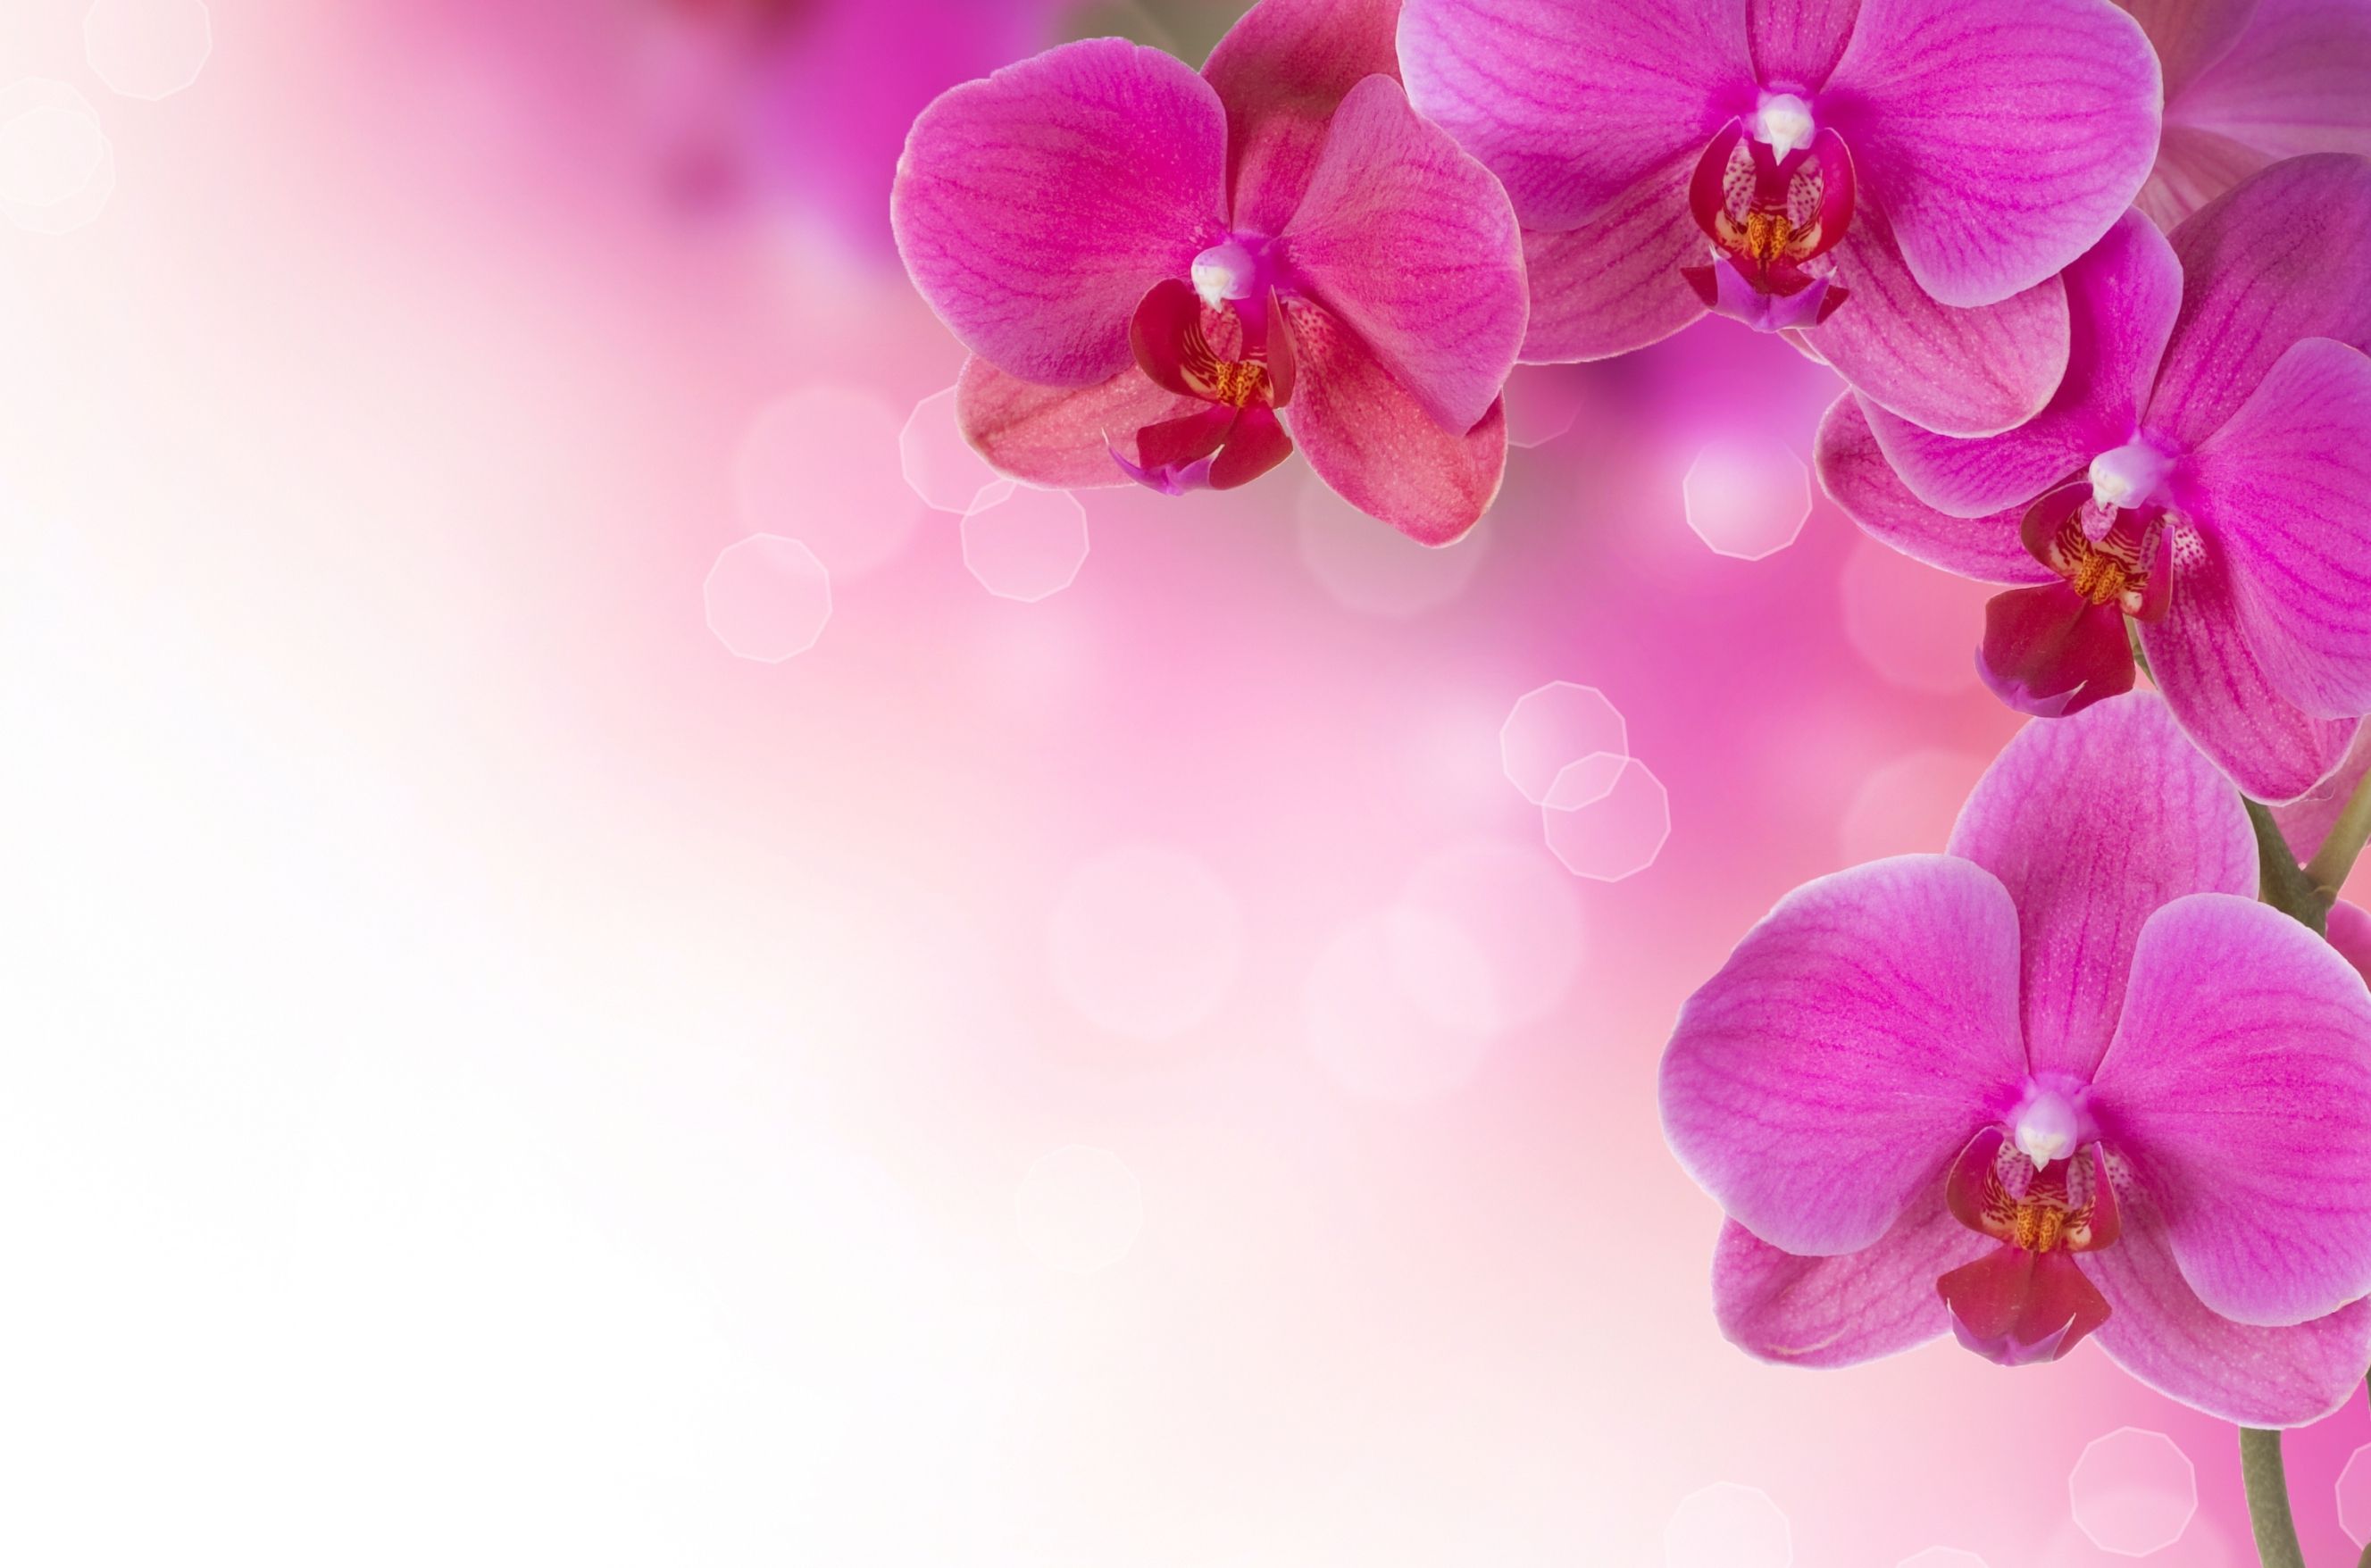 Pink Orchid Wallpaper 1080p Desktop Wallpaper Box. Pink flowers